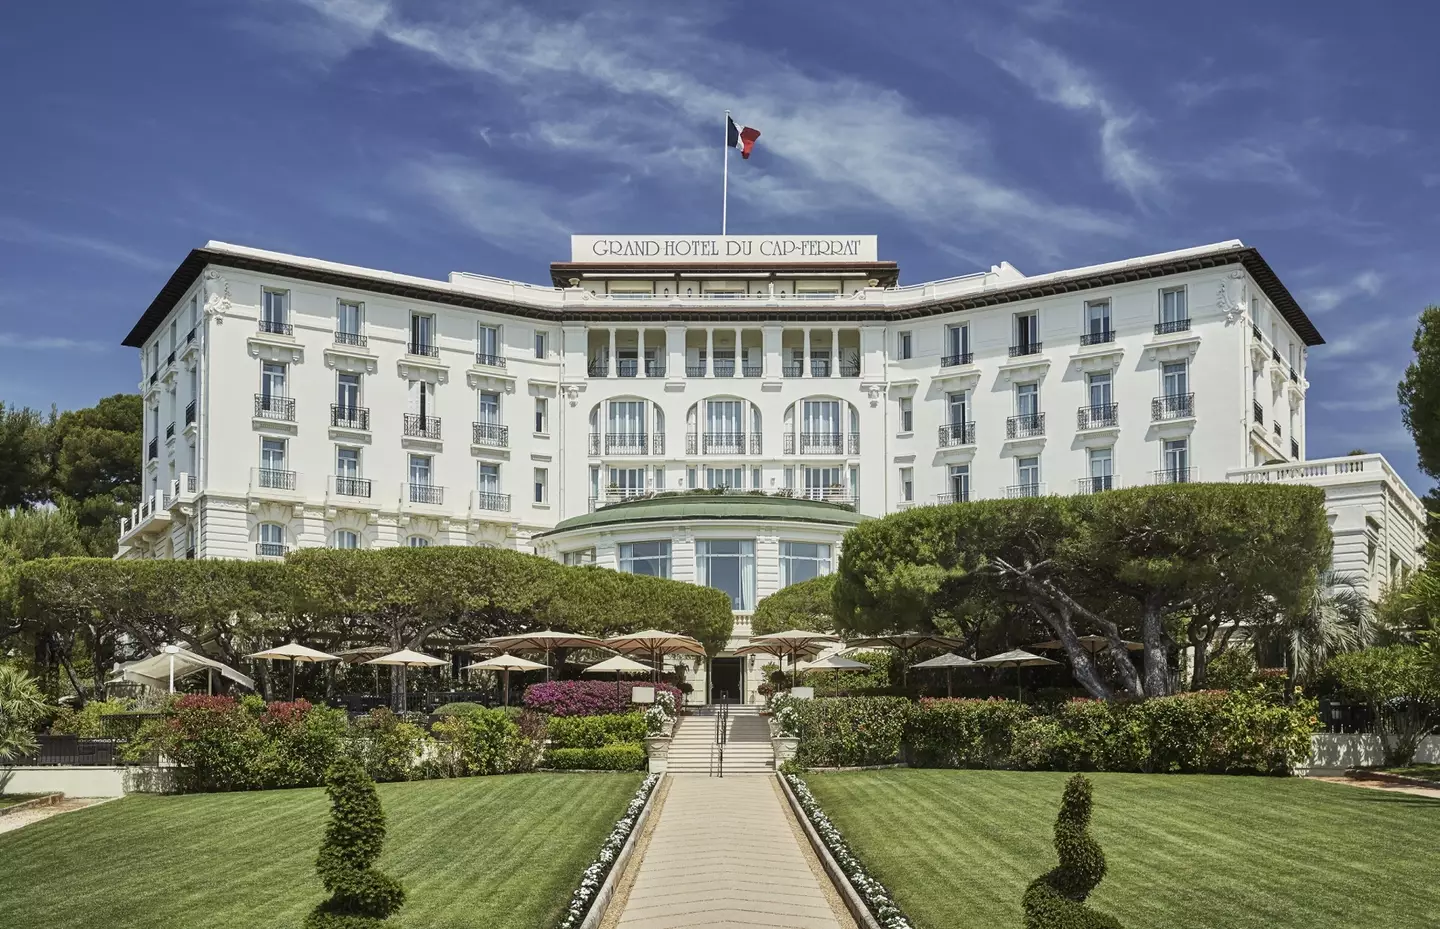 Emily in Paris was filmed in Grand-Hotel du Cap-Ferrat A Four Seasons Hotel.